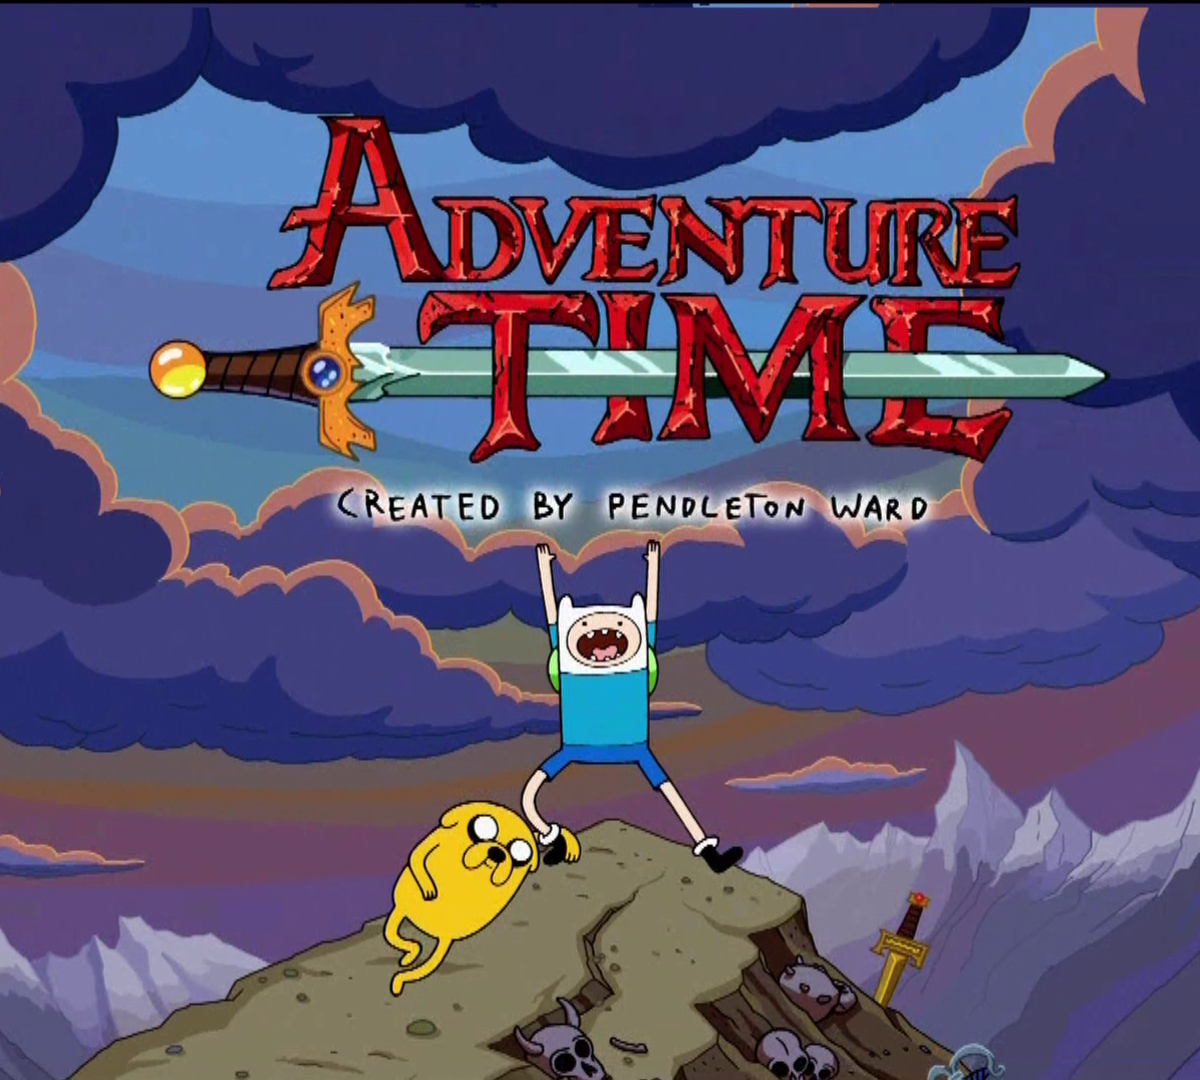 Adventure time intro